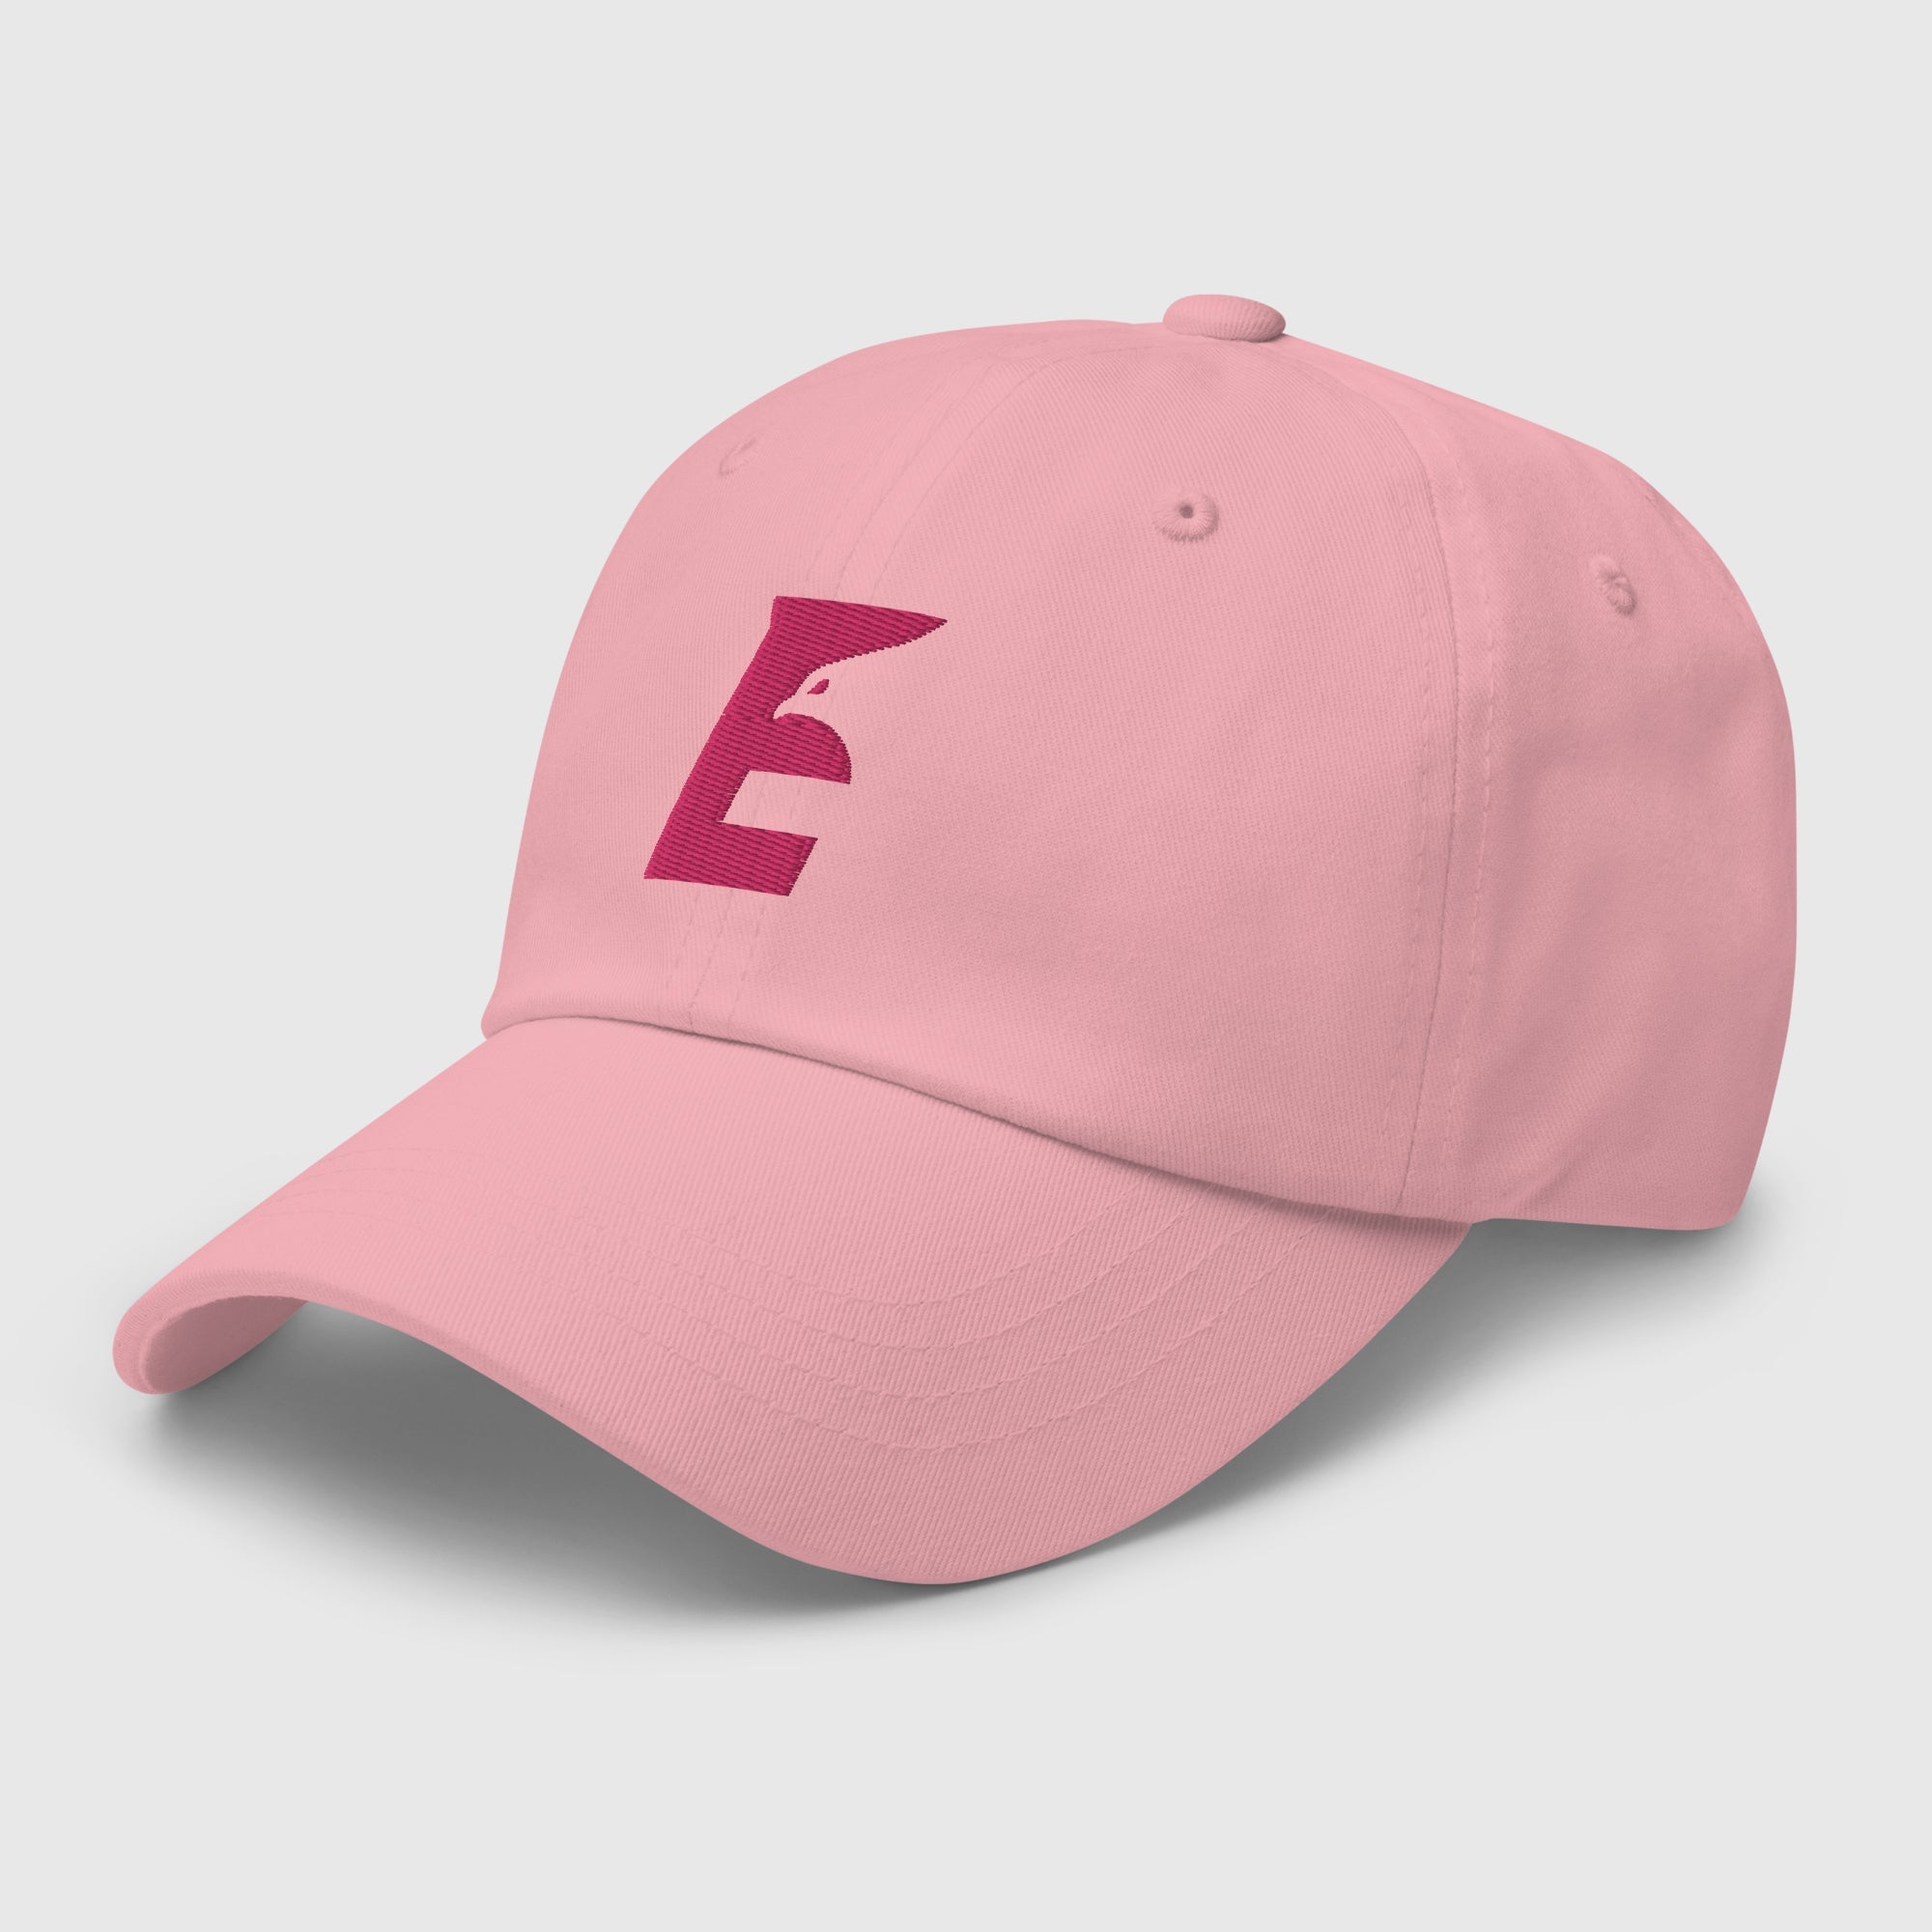 Cap Black Pink - Eagle